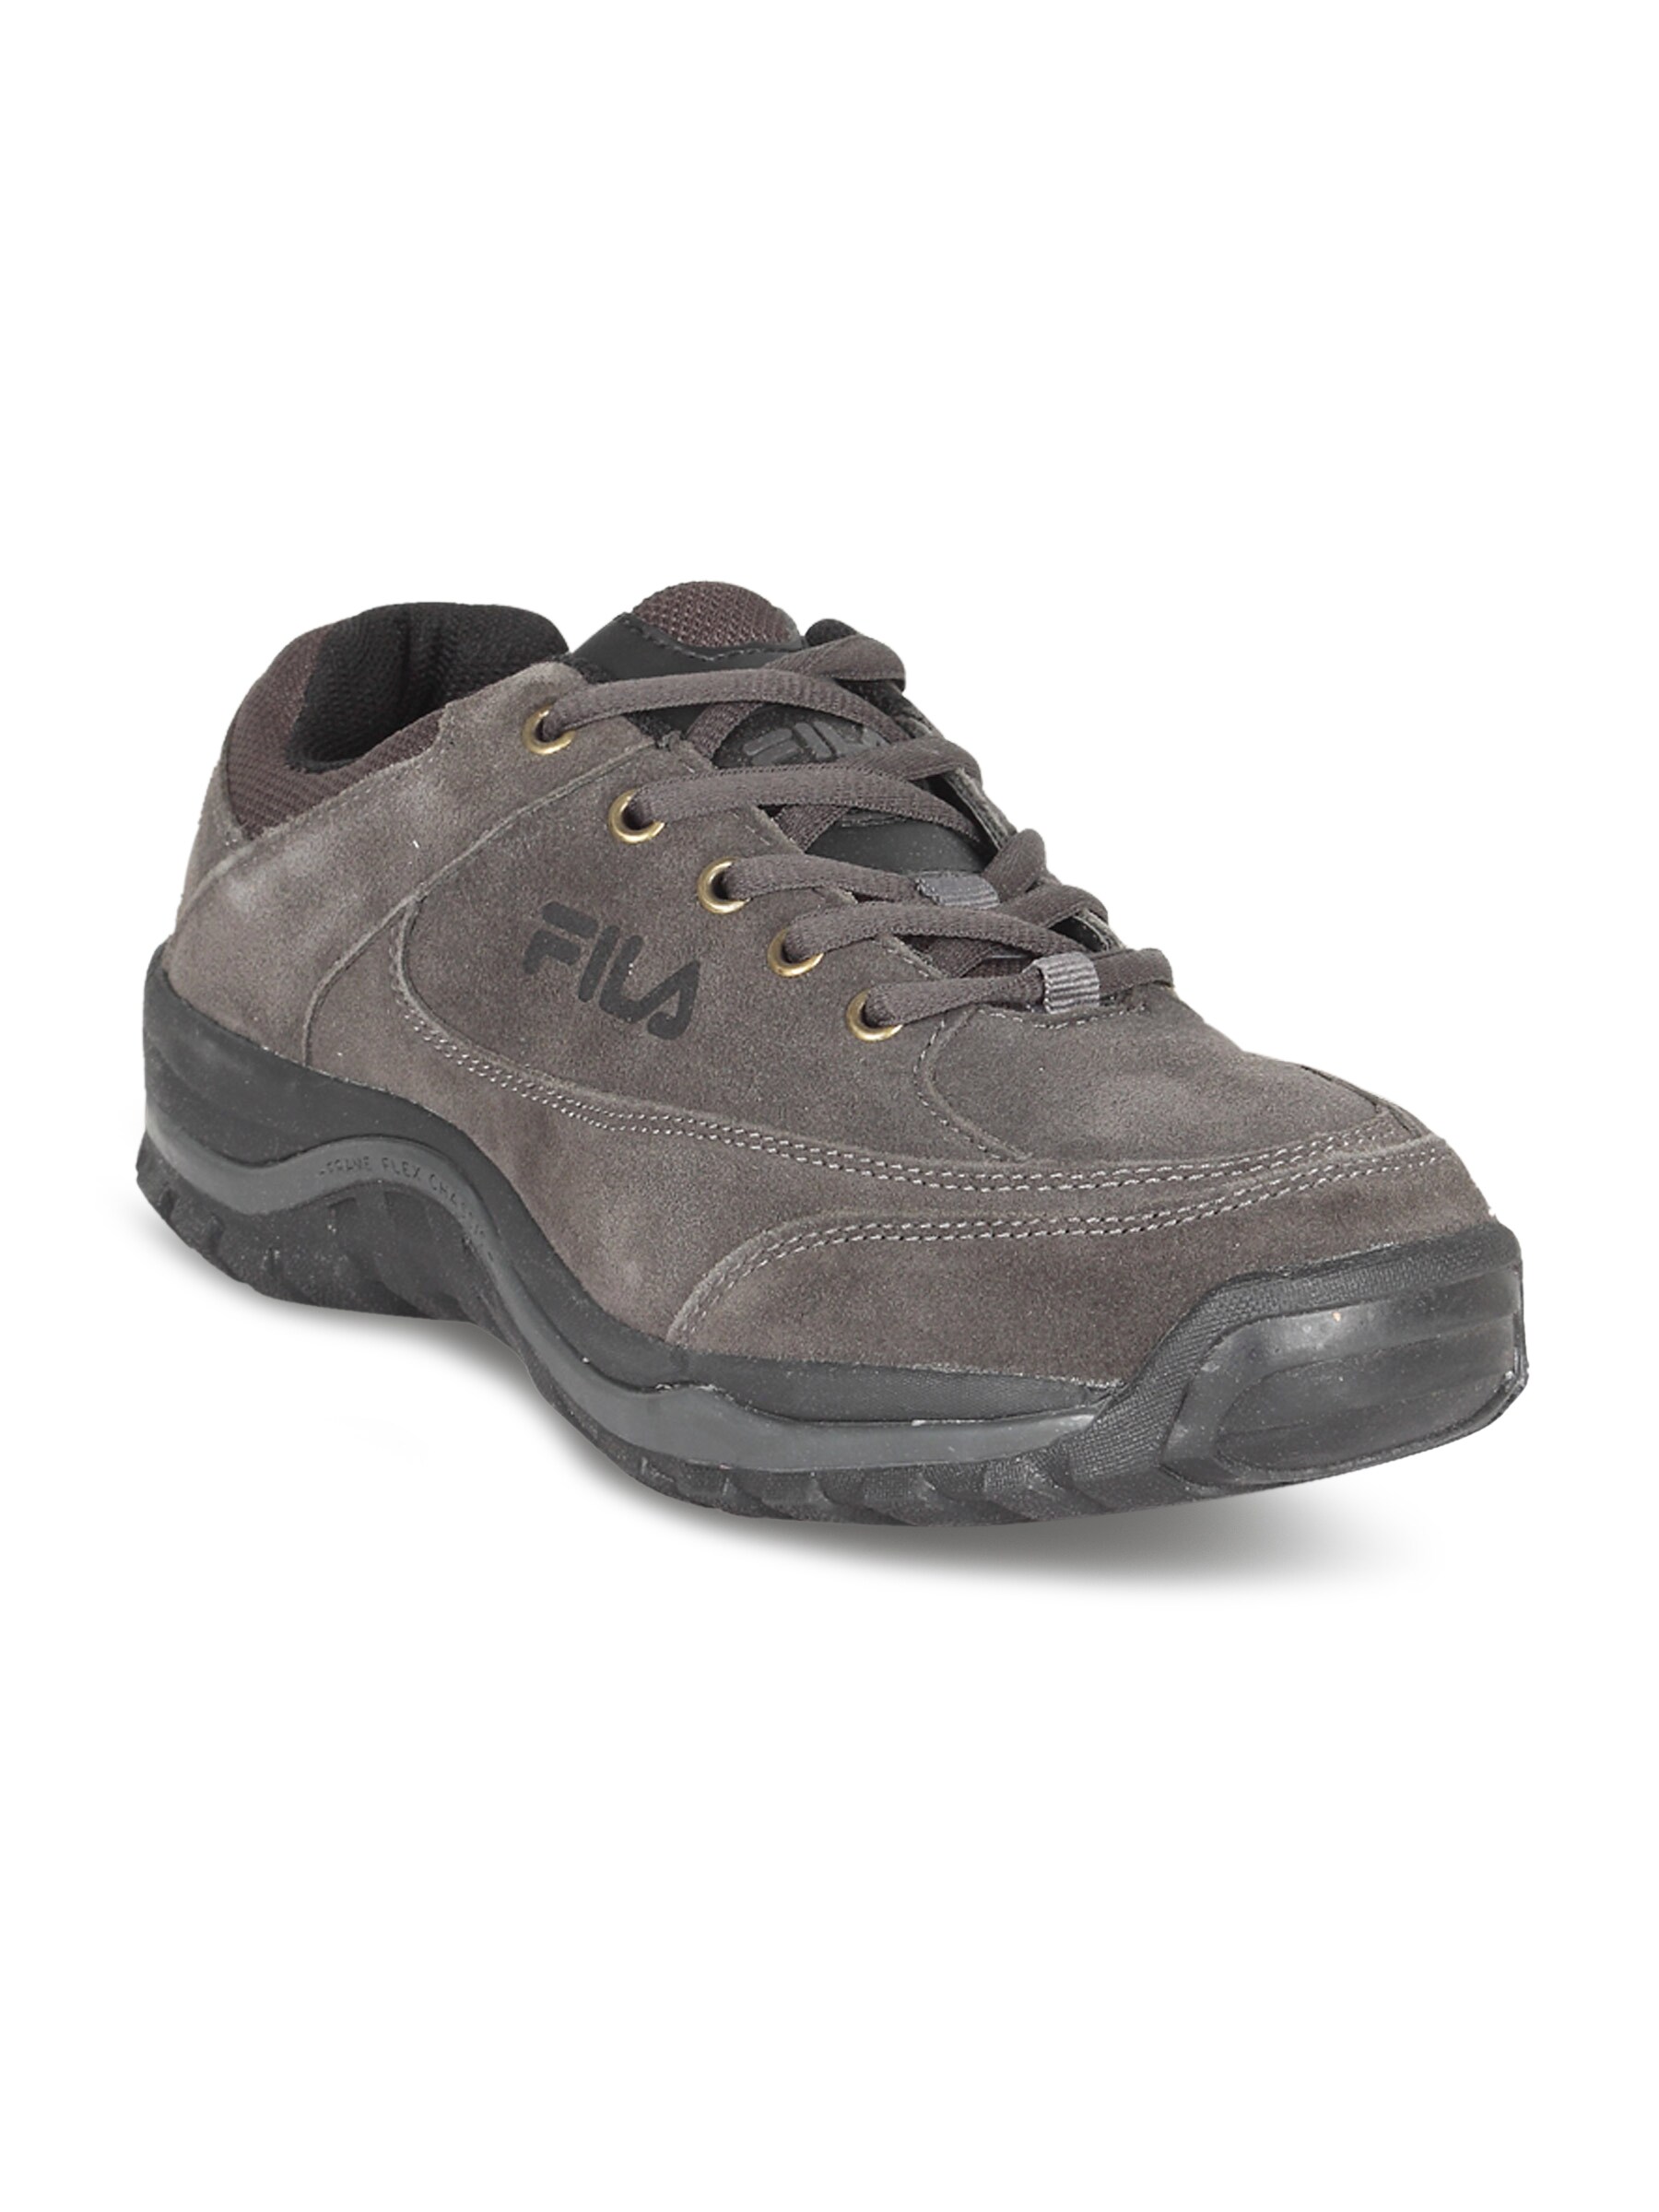 Fila Men's Rockridge Slate Shoe